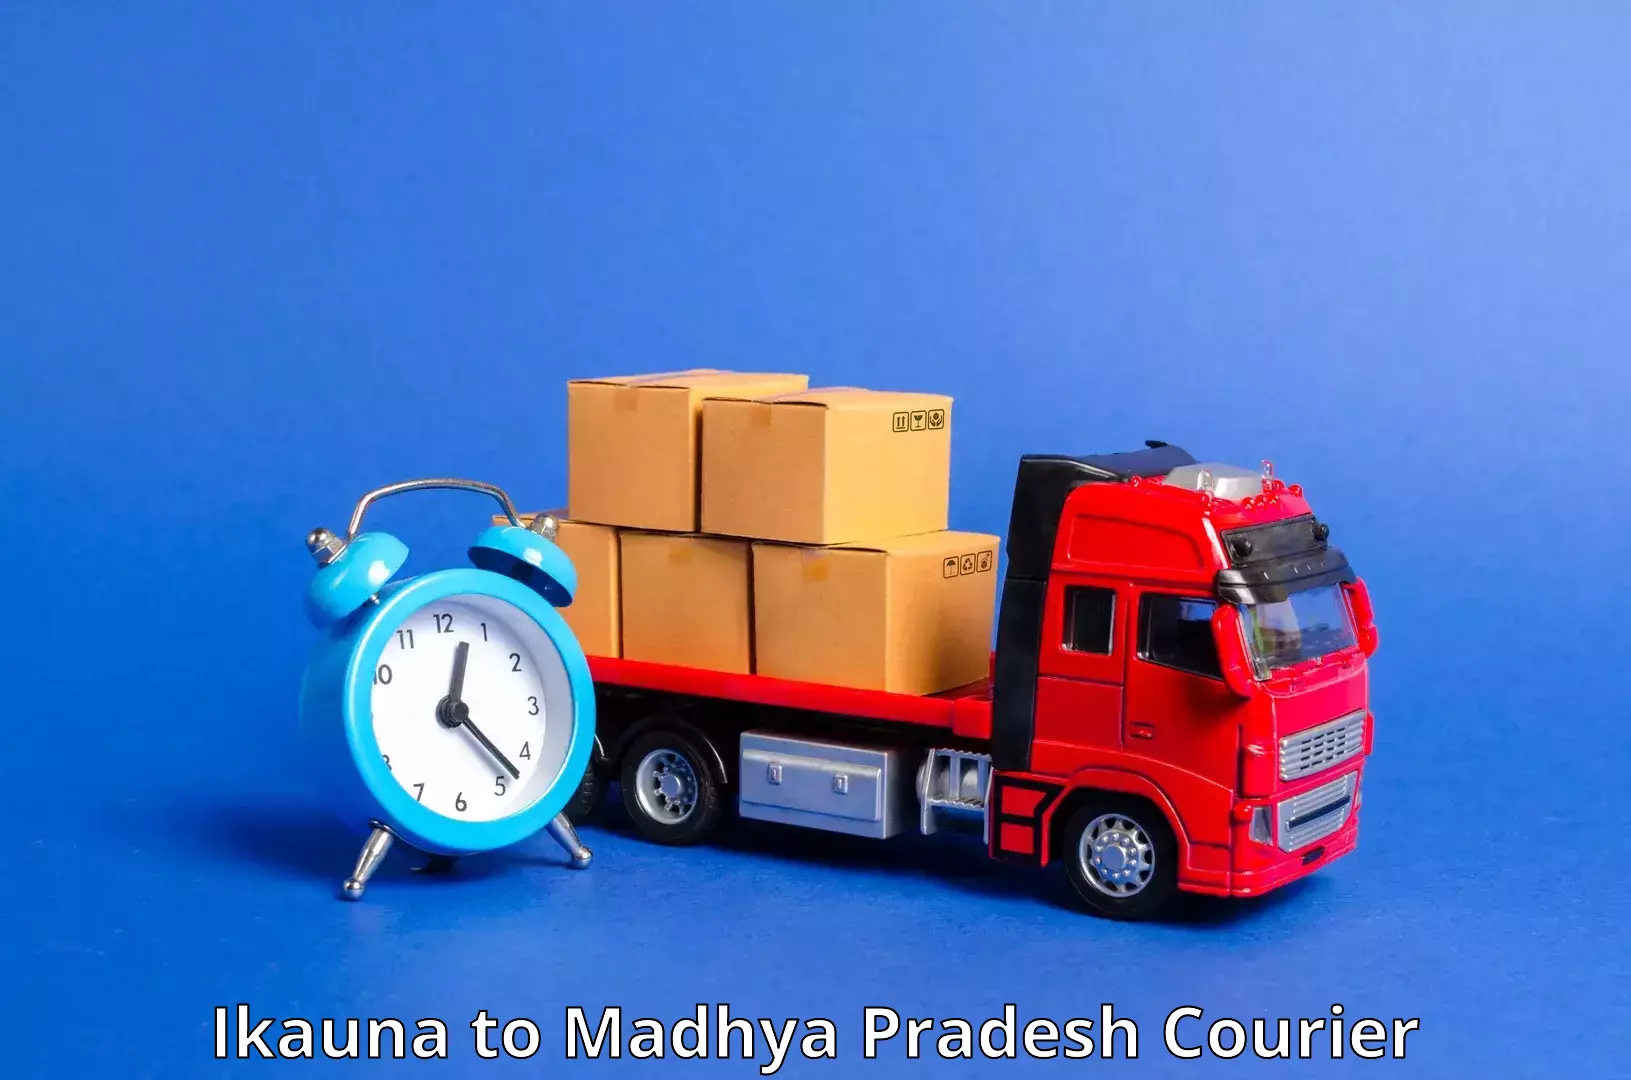 Courier service innovation Ikauna to Chand Chaurai